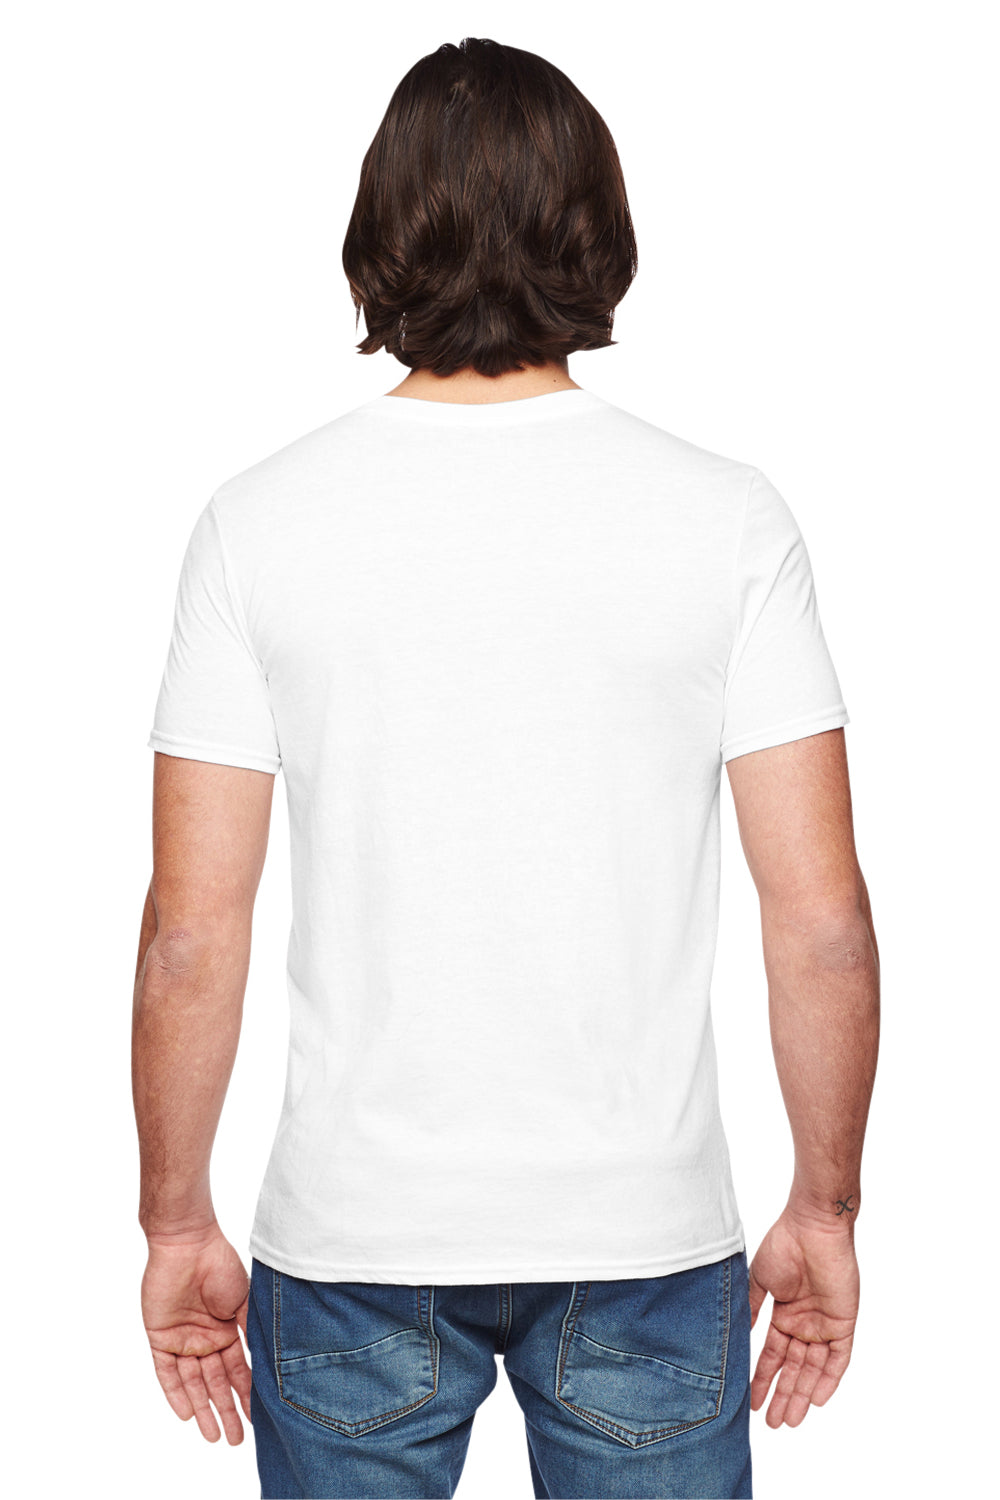 Anvil 6750 Mens Short Sleeve Crewneck T-Shirt White Back